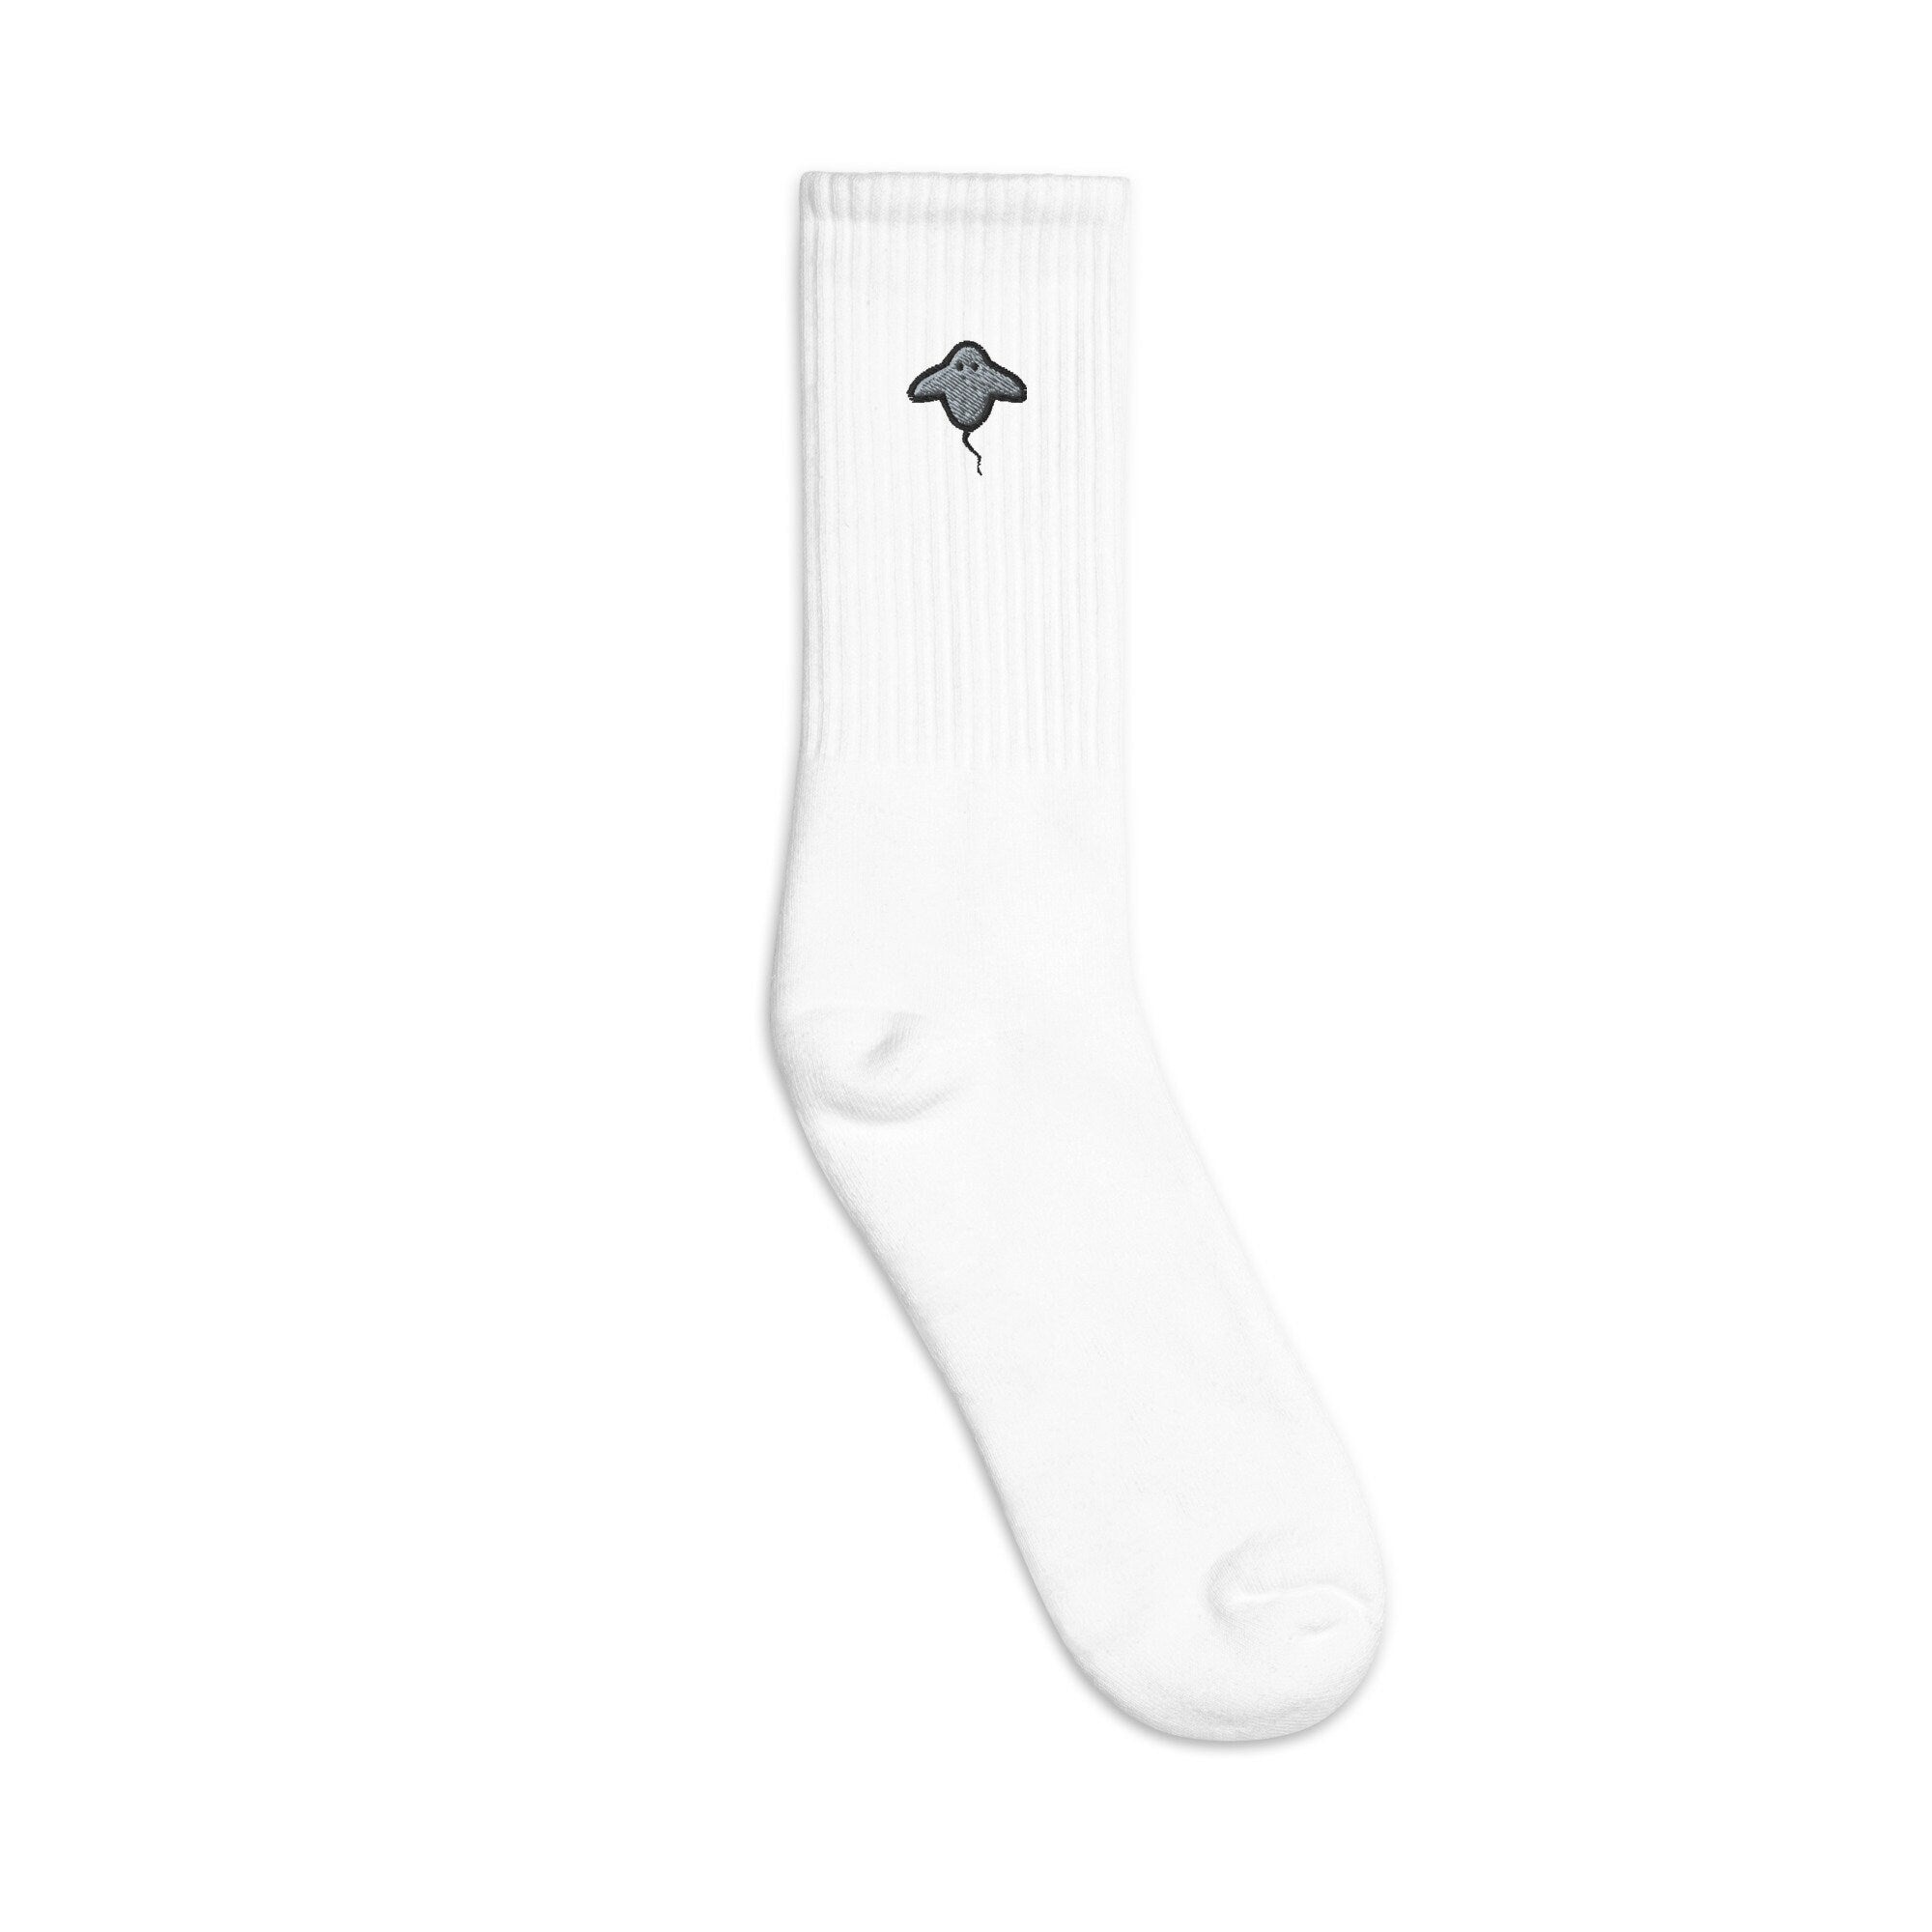 Stingray Embroidered Socks, Premium Embroidered Socks, Long Socks Gift - Multiple Colors